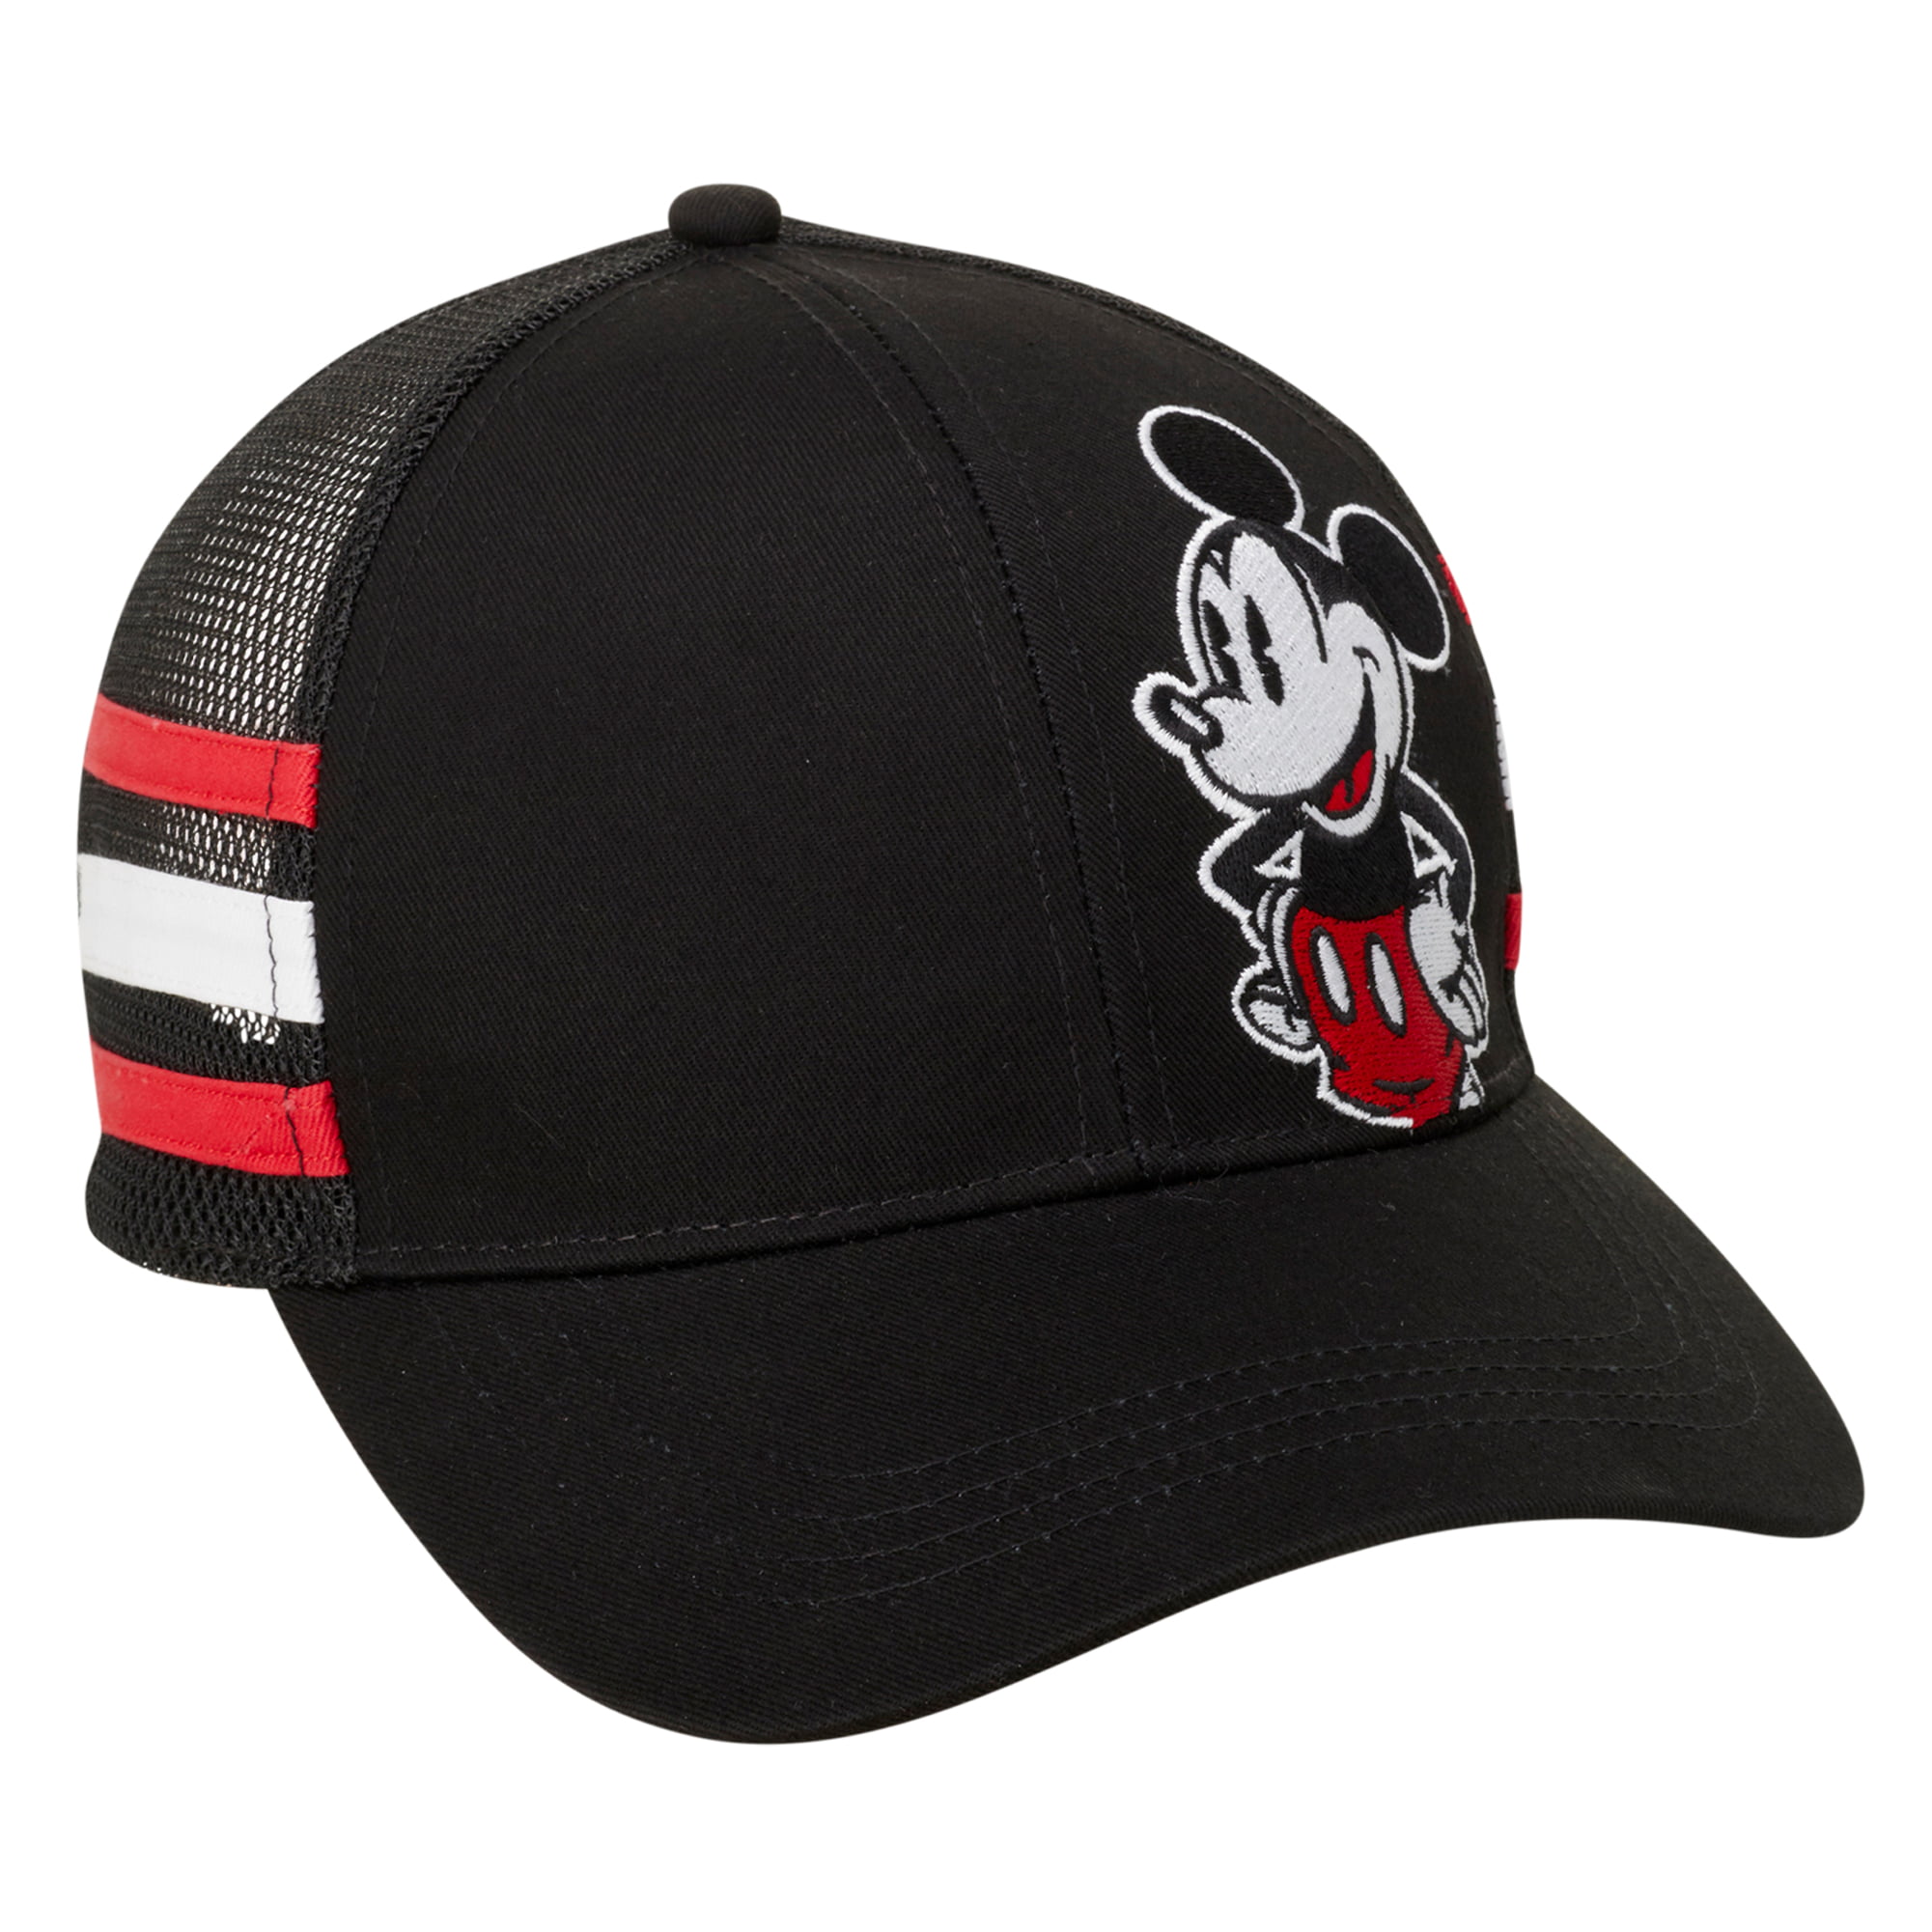 Disney's Mickey Mouse Gray Snapback Adjustable Hat/Cap 